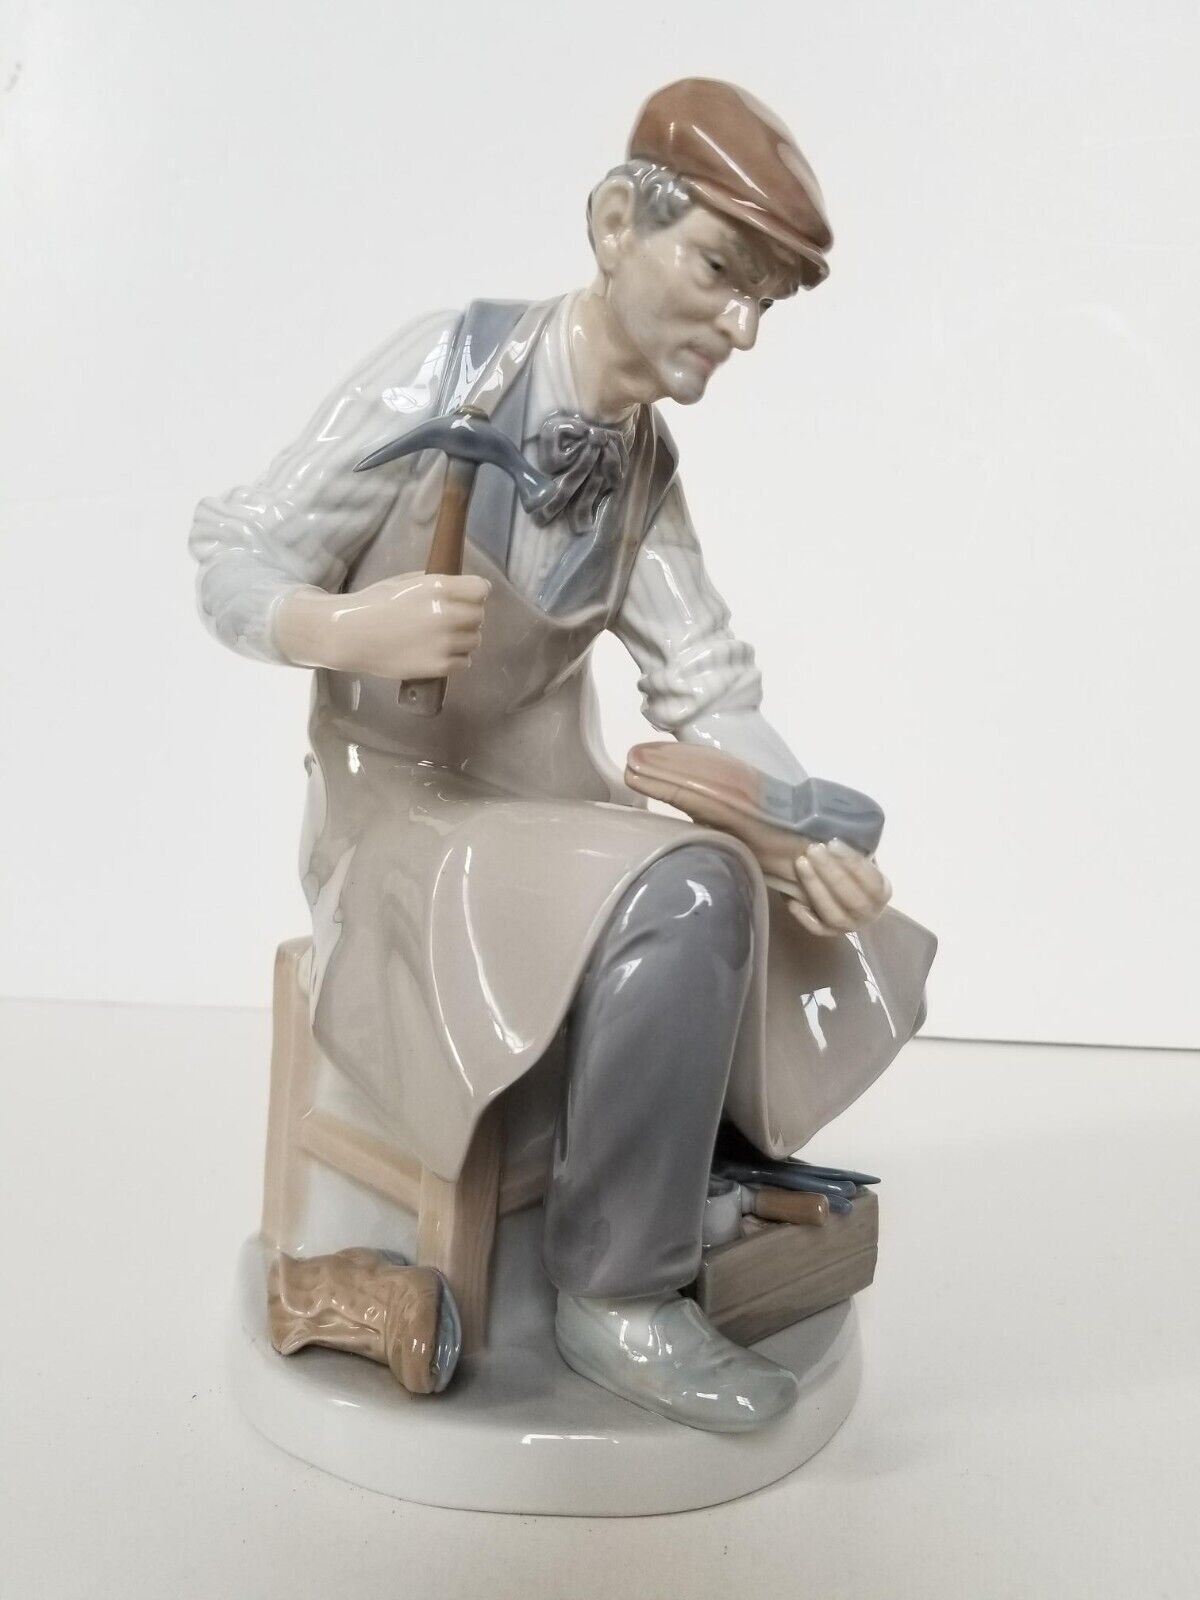 Vintage Llardo Cobler/Shoemaker Figurine. Excellent condition